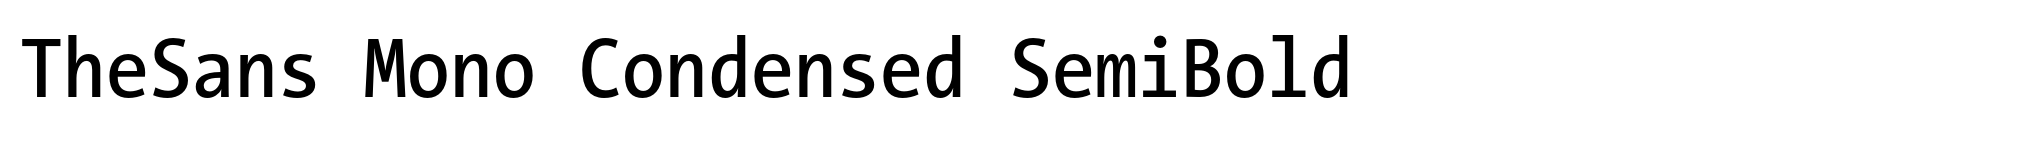 TheSans Mono Condensed SemiBold image